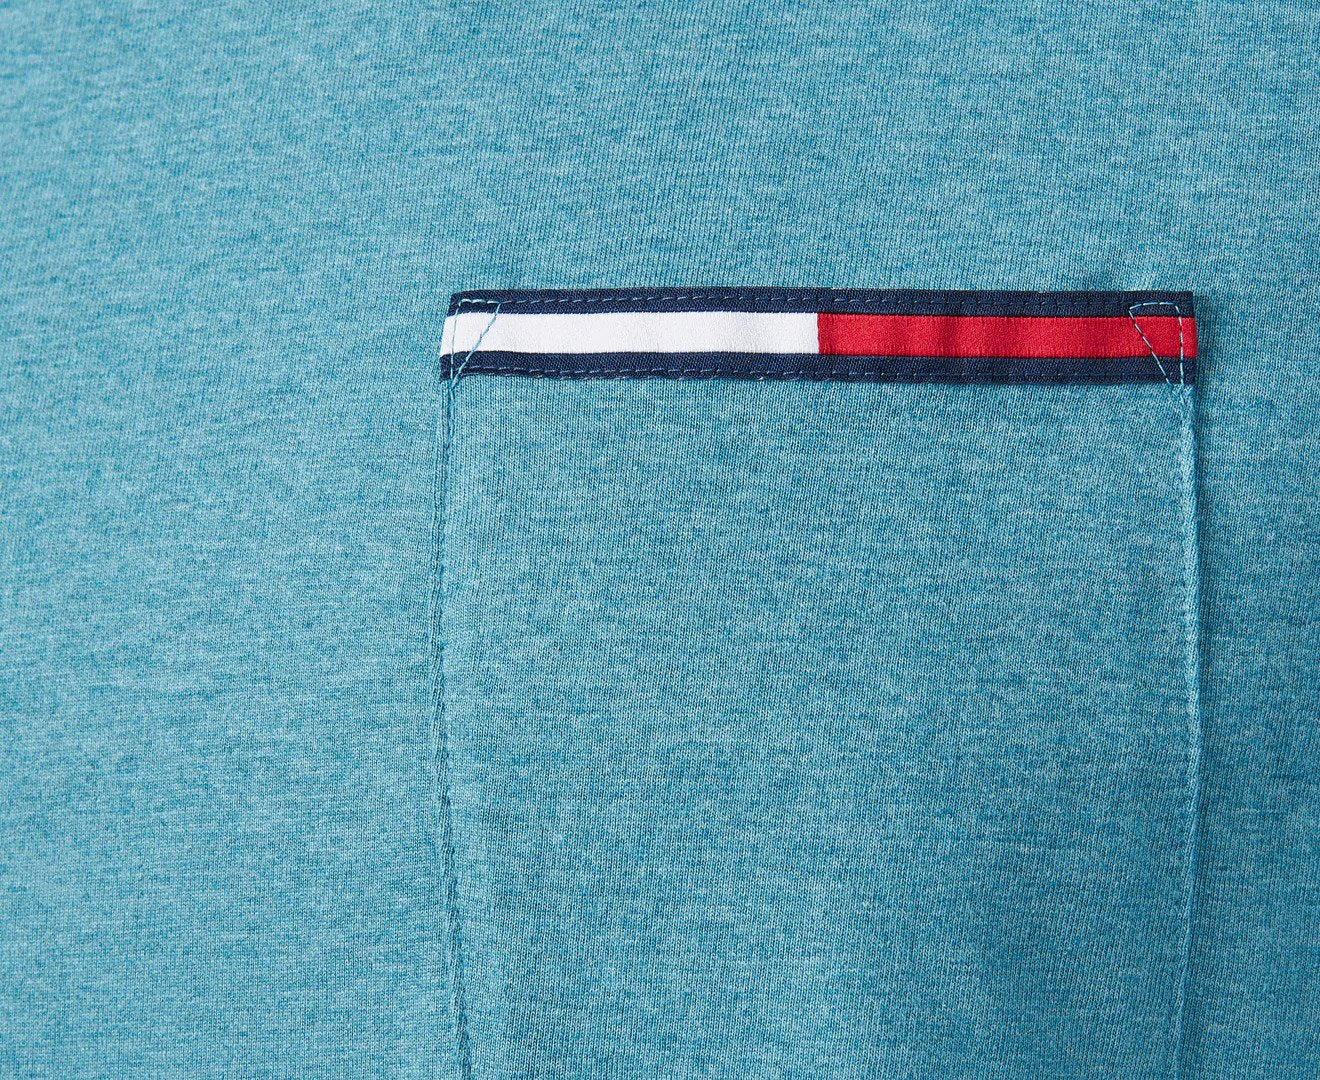 Tommy Hilfiger Men's Essential Flag Pocket Tee / T-Shirt / Tshirt - Blue